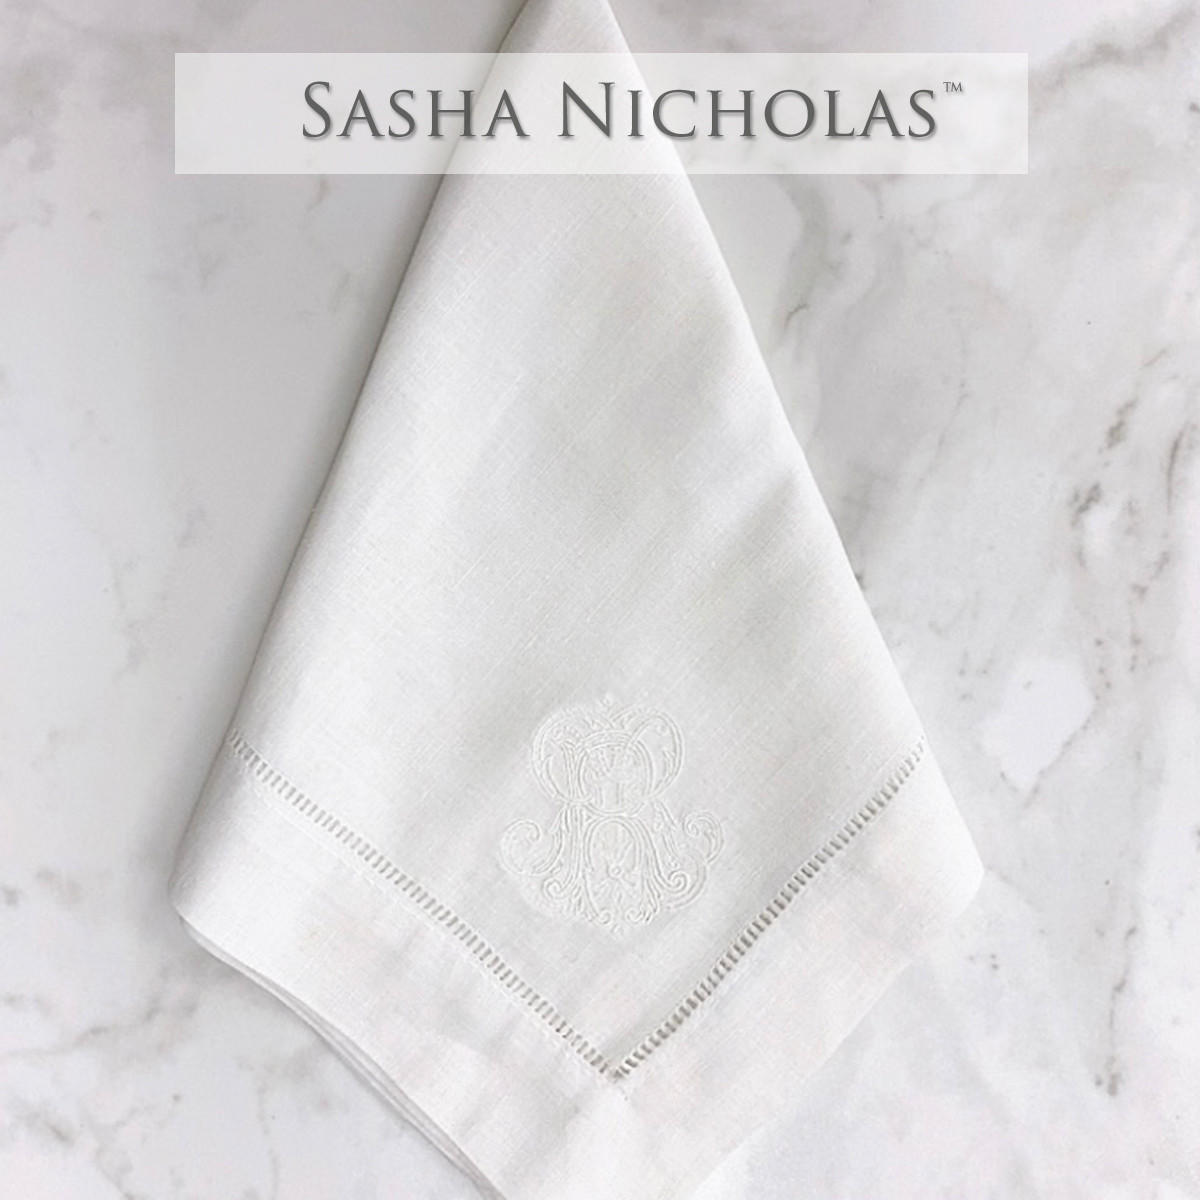 Sasha Nicholas White Linen Dinner Napkin, Couture Monogram, SNLIN100, Sasha Nicholas